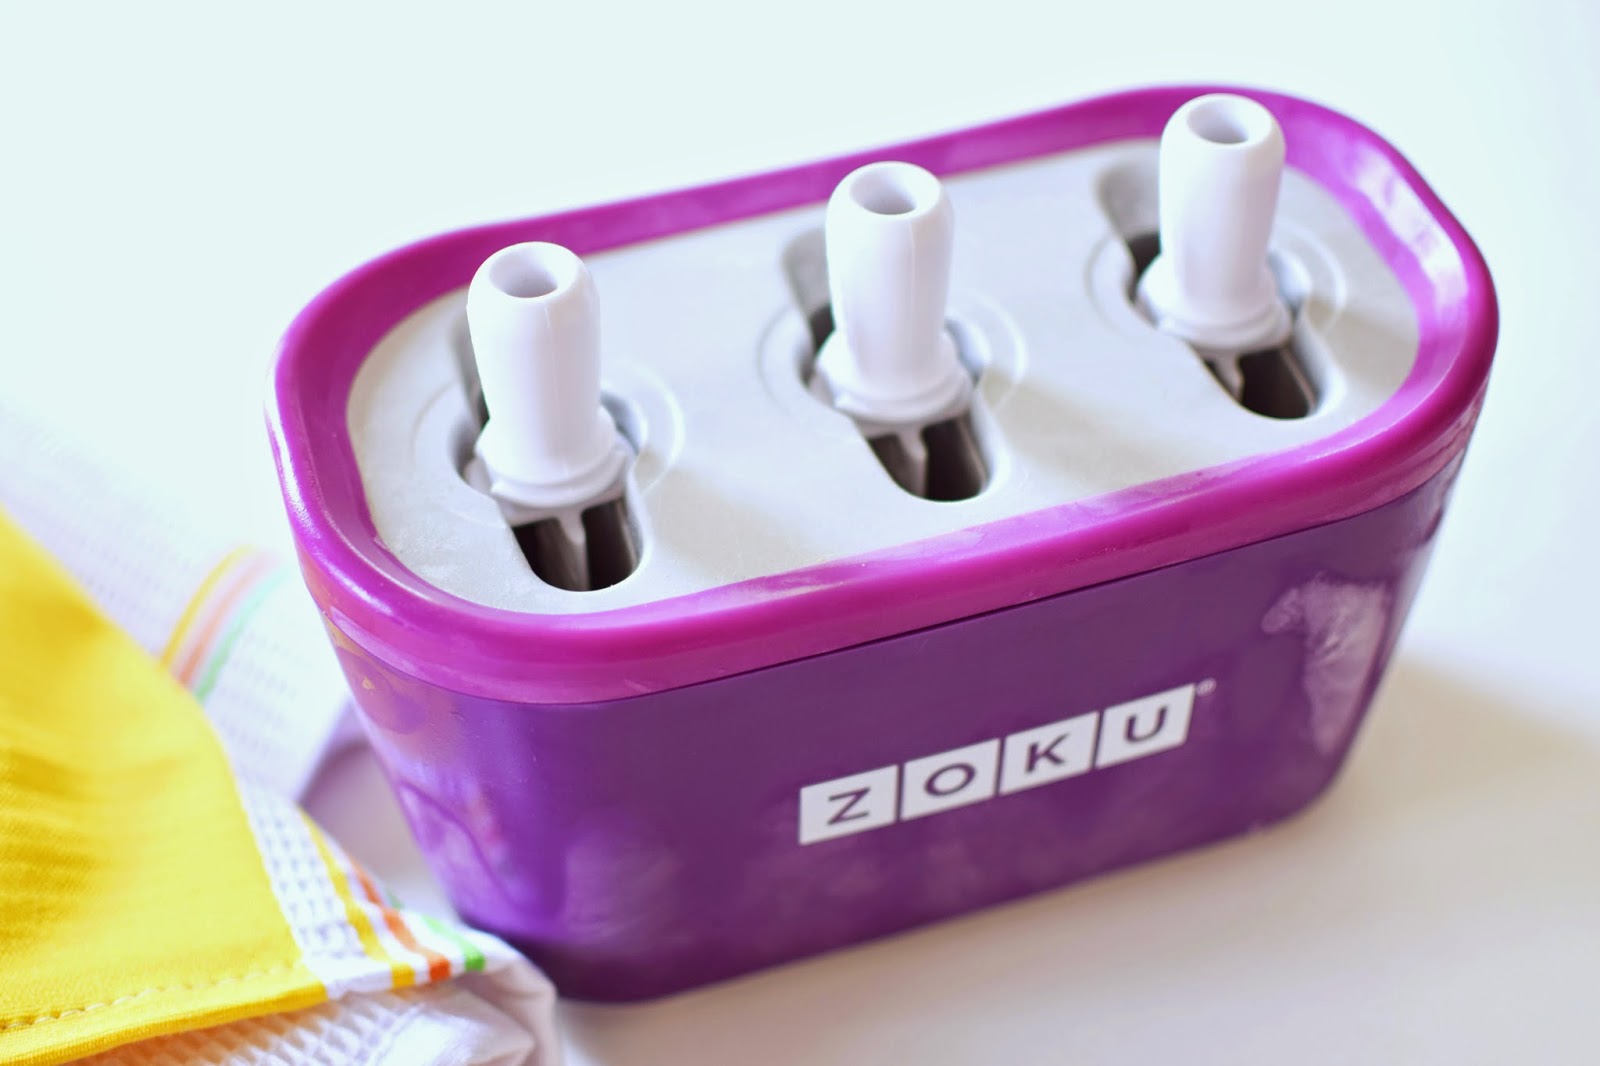 Zoku Quick Pop Maker Product Review 